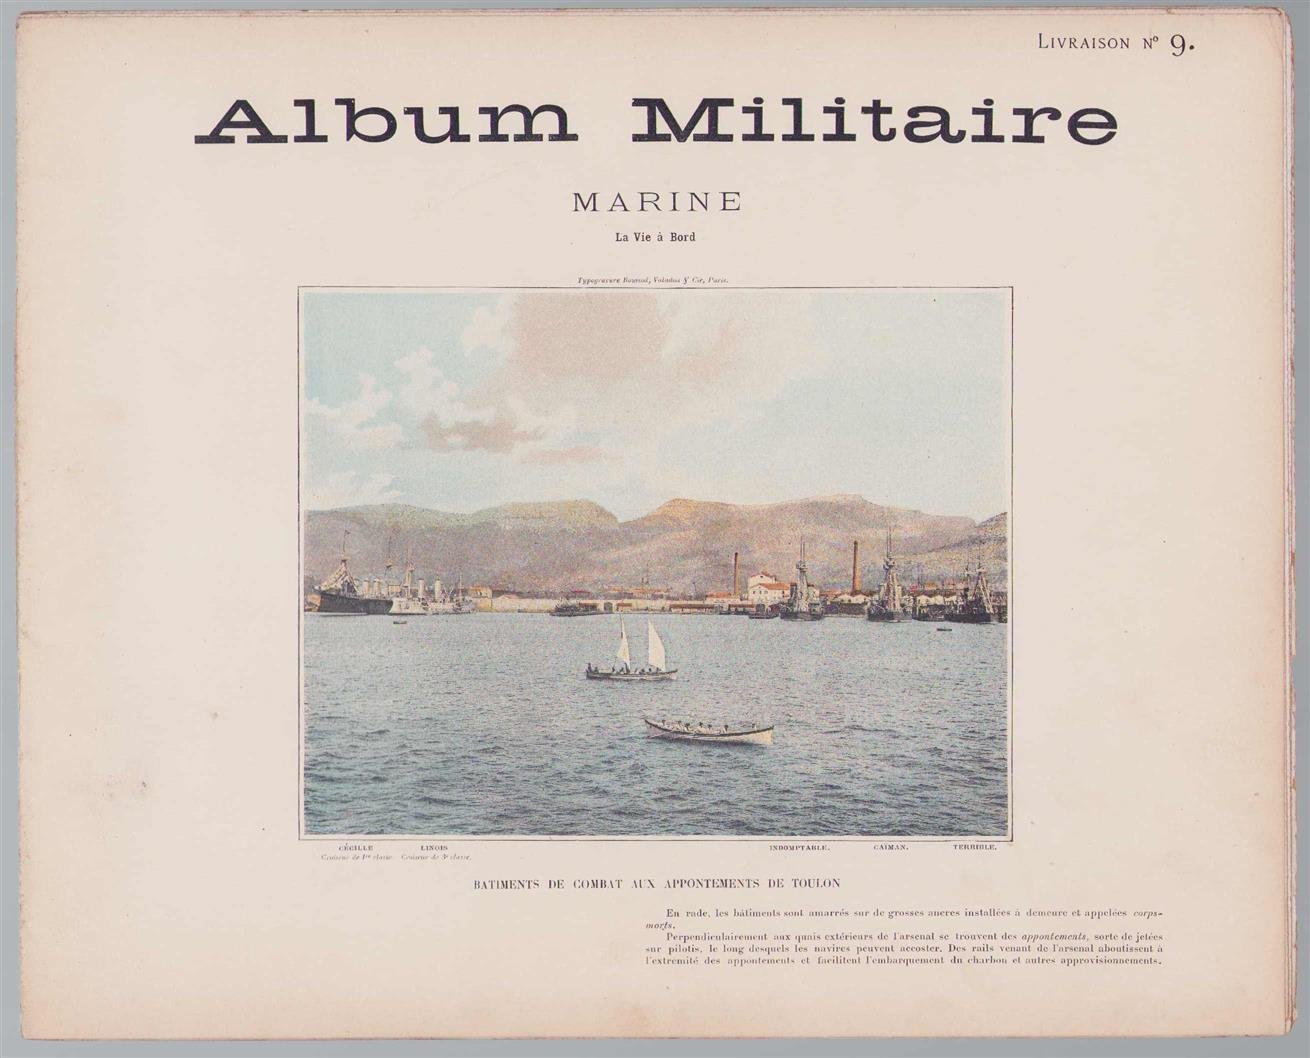 n.n - Album militaire de l'Armee francaise. Marine  La vie a Bord (2)